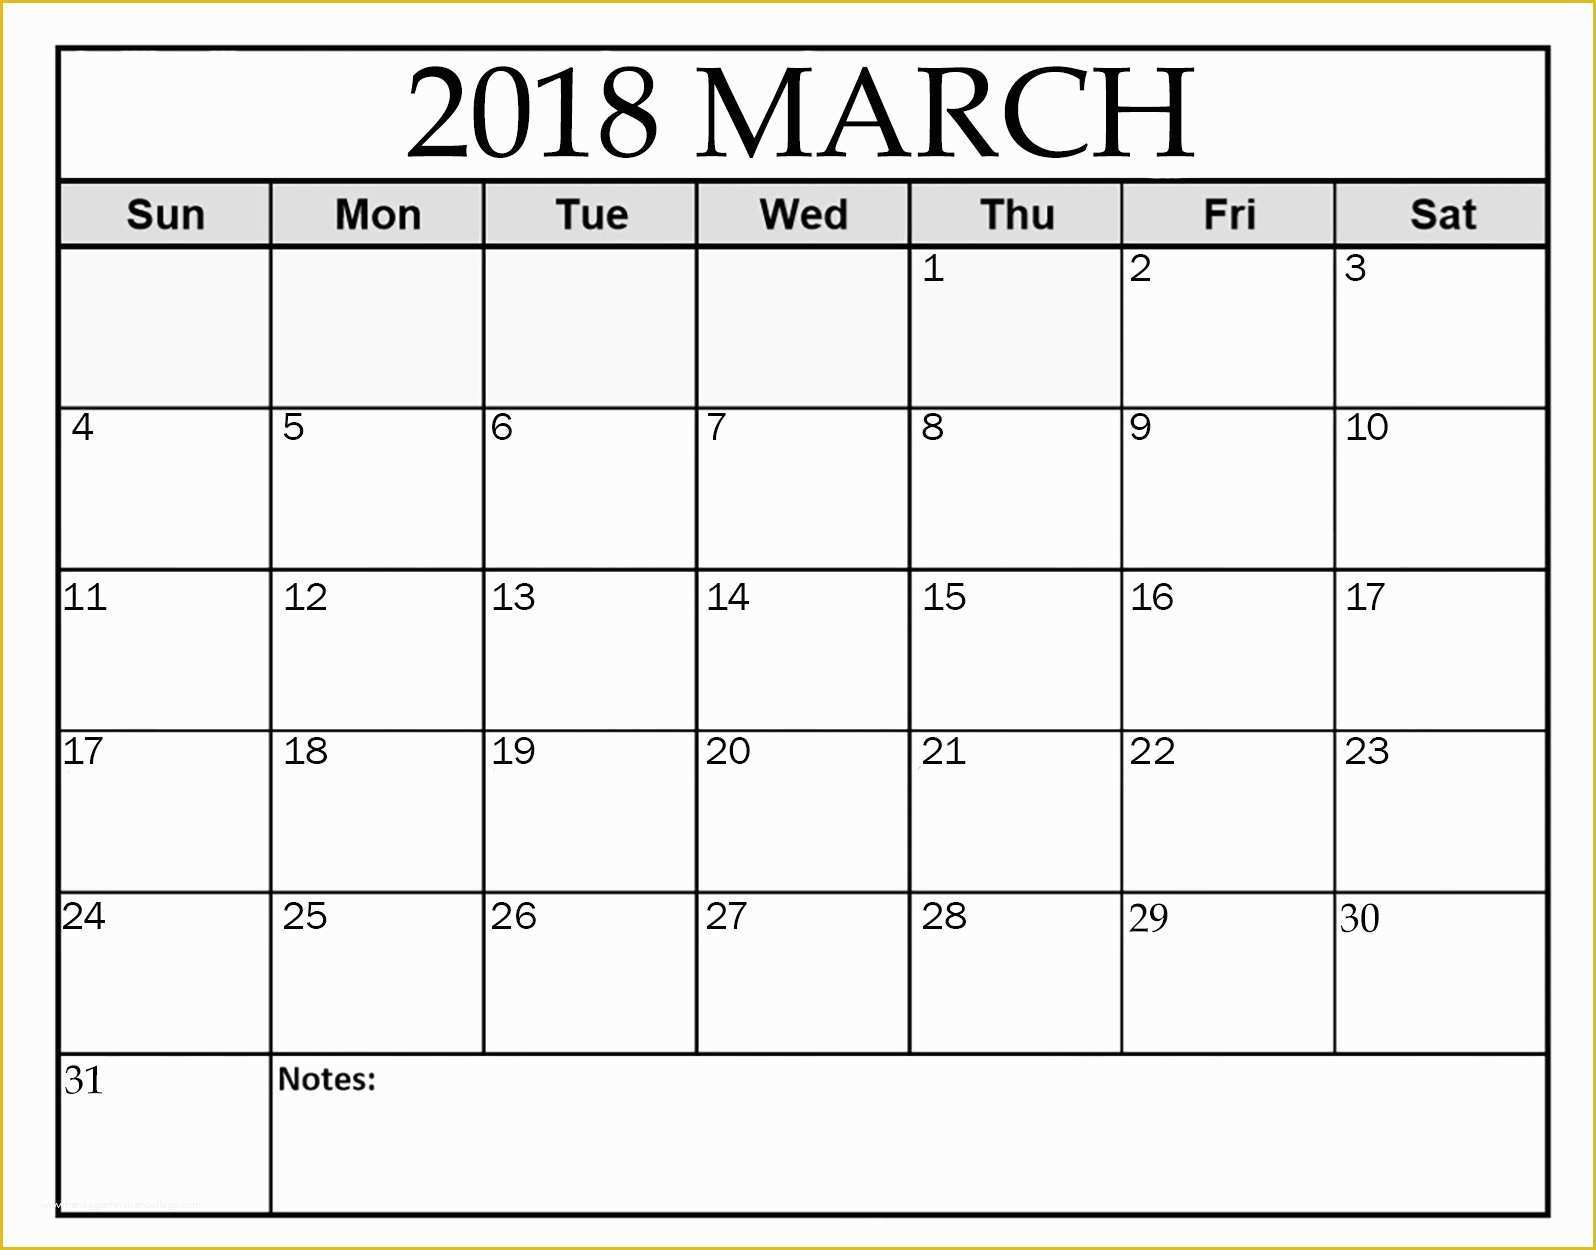 Free Calendar 2018 Template Of Free 5 March 2018 Calendar Printable Template source